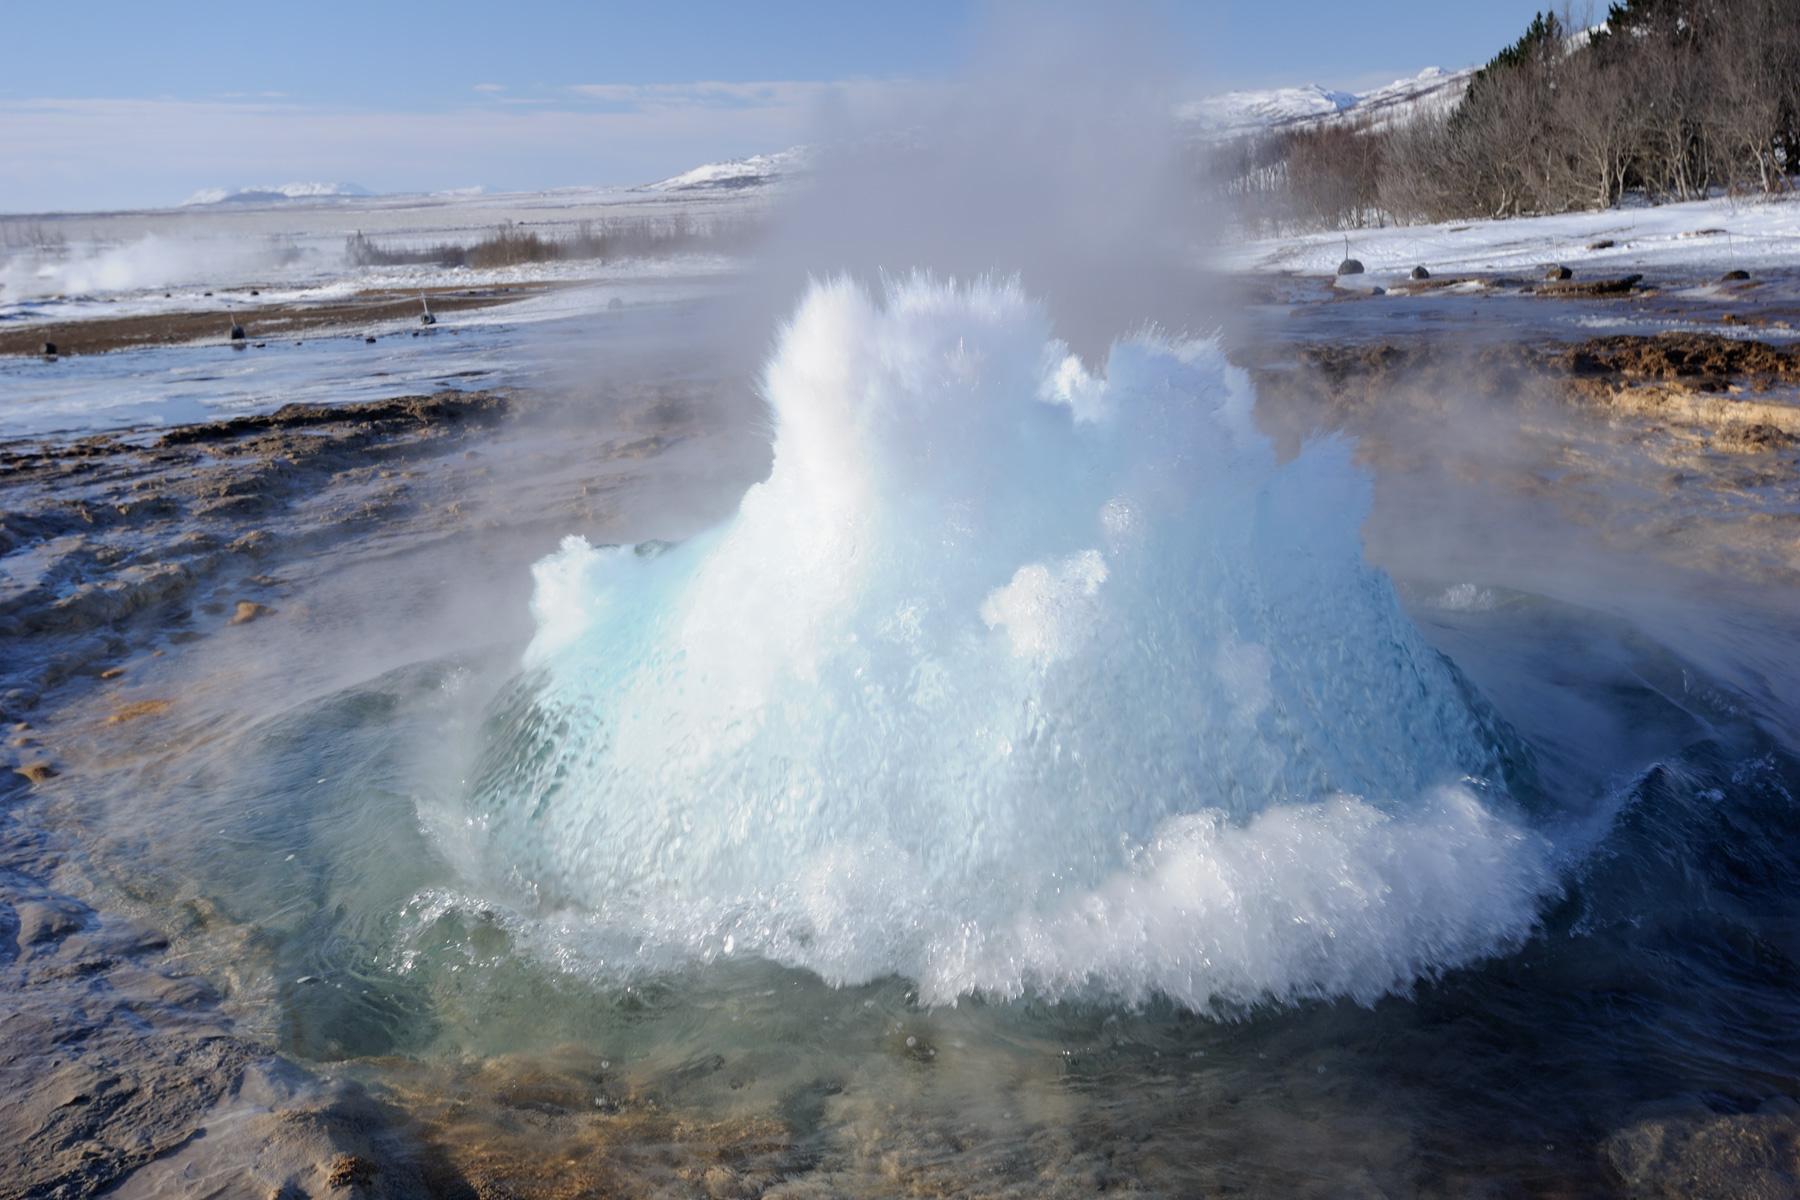 Islande - Geysir : geyser Strokkur au début de l'éruption du jet